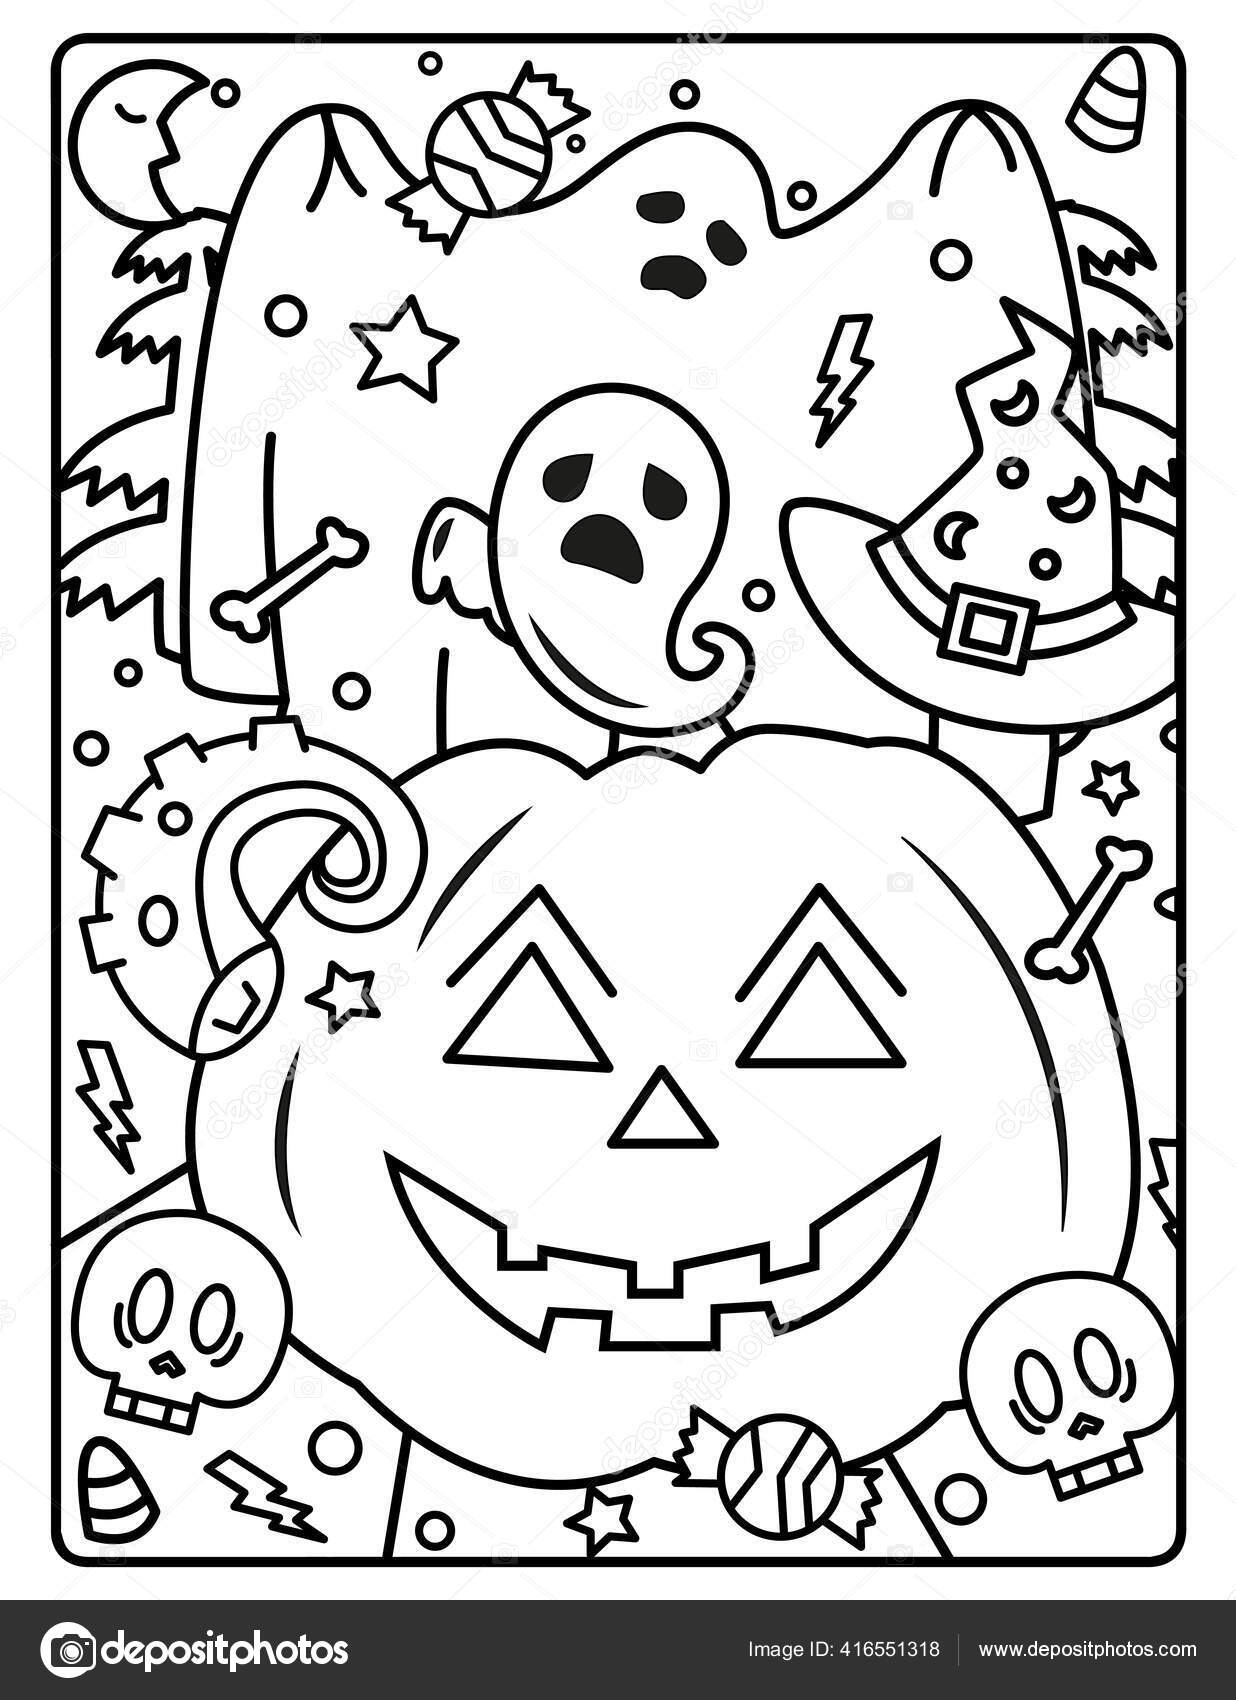 Halloween coloring page kids download cute adorable halloween coloring page stock illustration by miketoonstudio